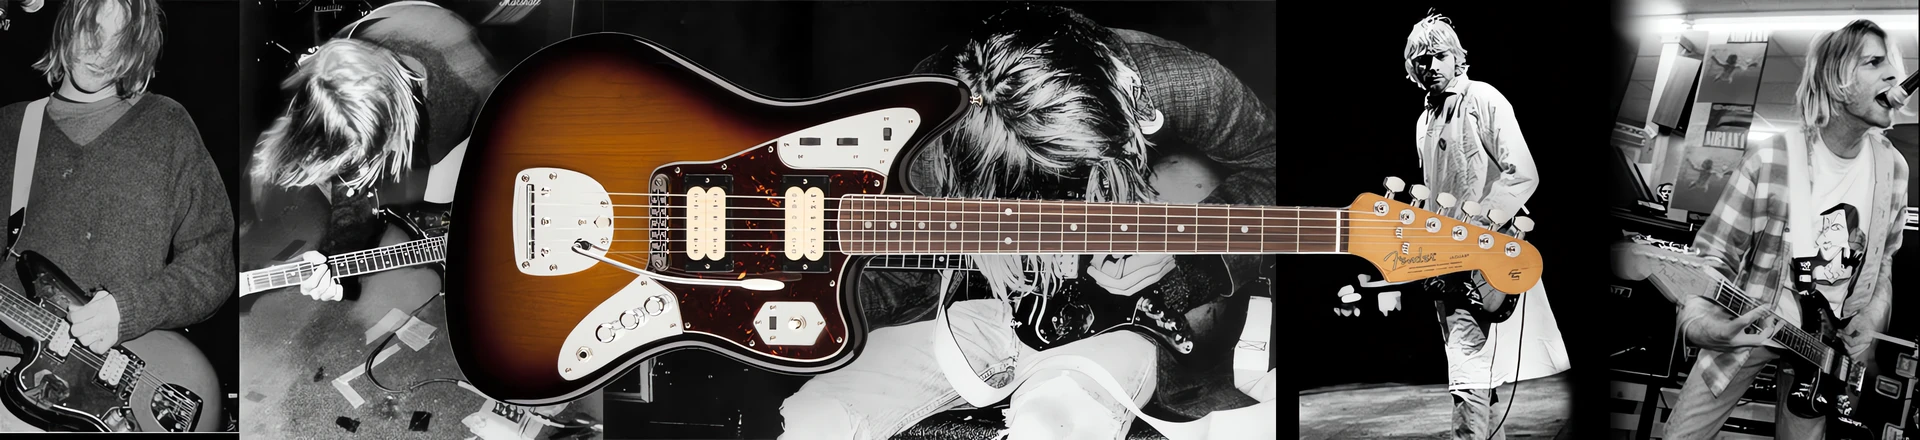 Fender Jaguar Kurt Cobain Signature - brzmienie "Nevermind"